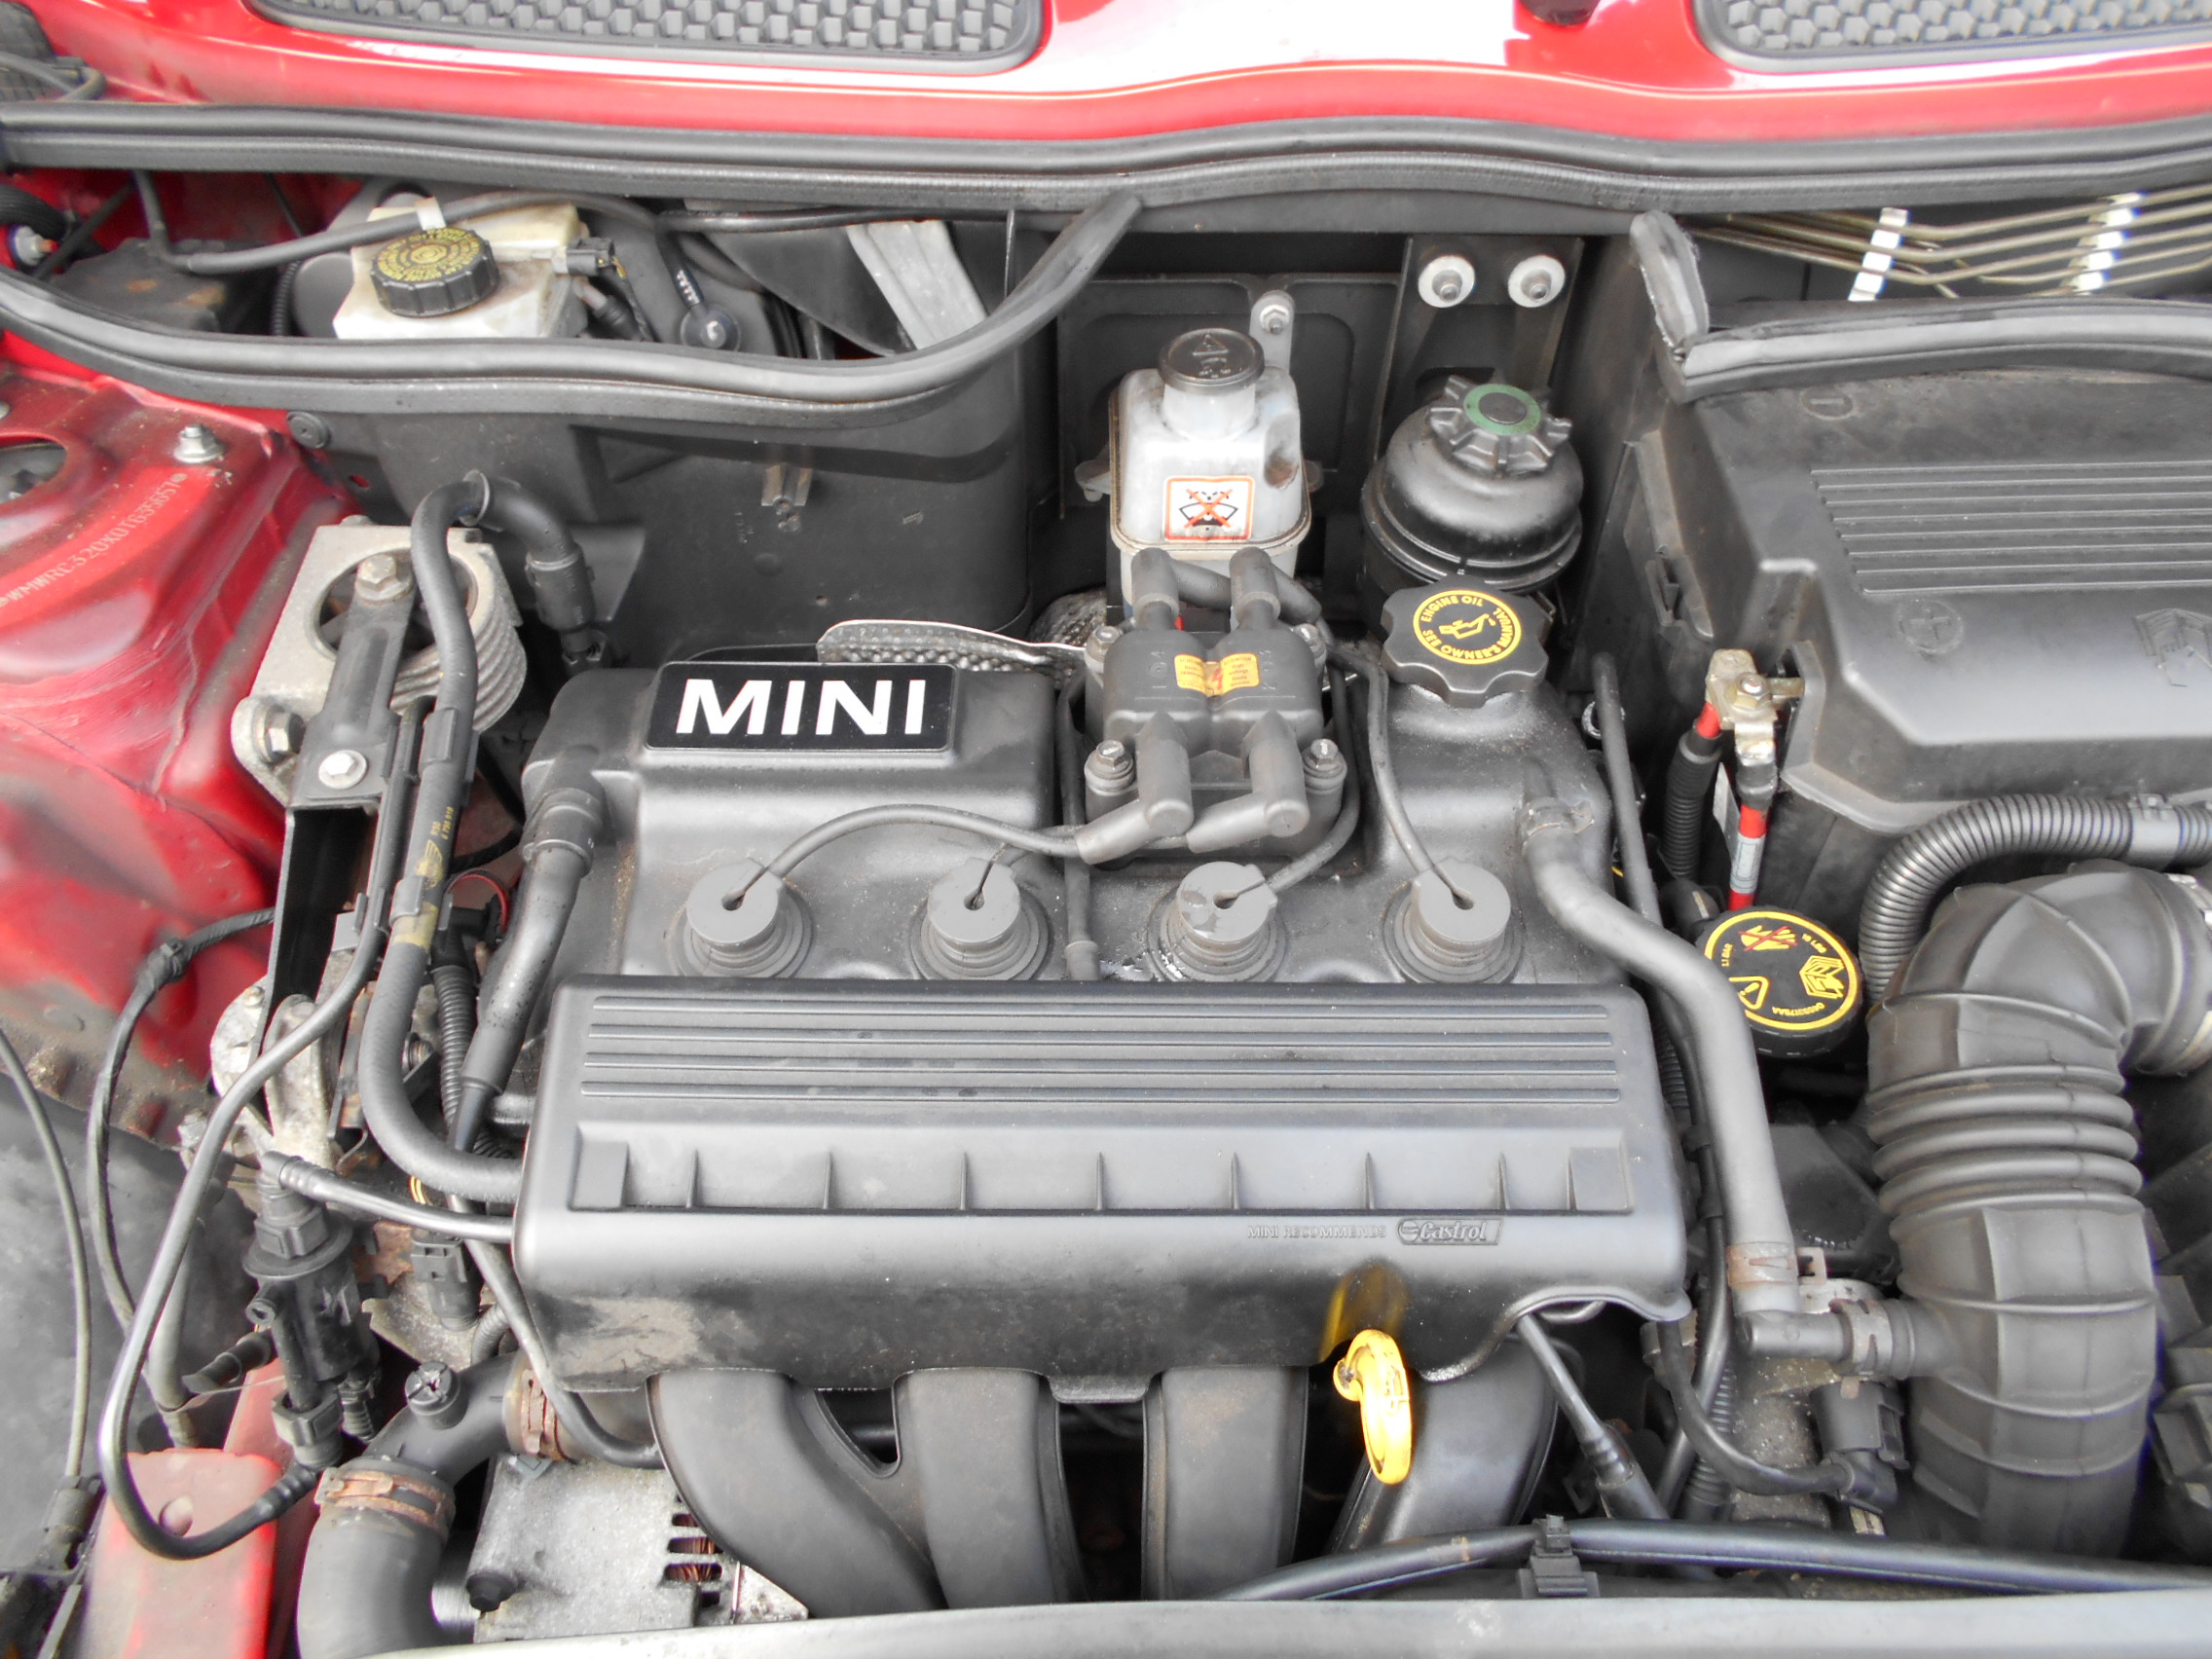 03 Red 1.6 BMW Mini Cooper - 5